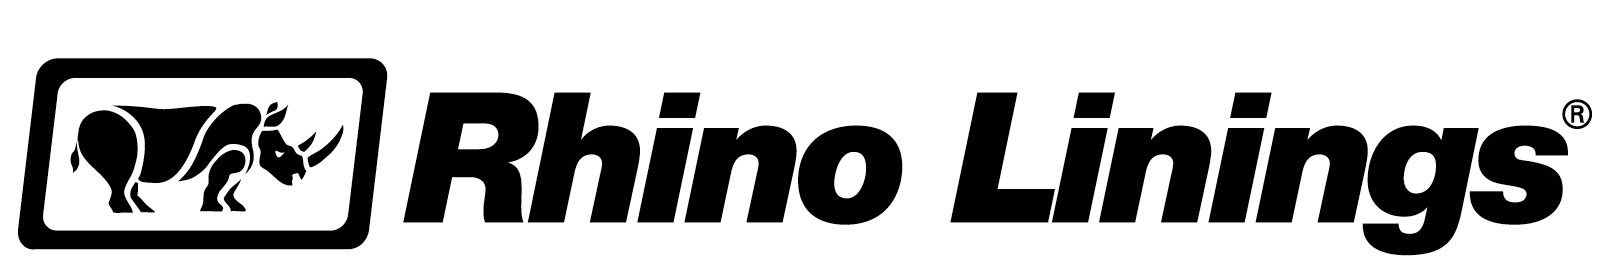 rhinolinings_logo.jpg